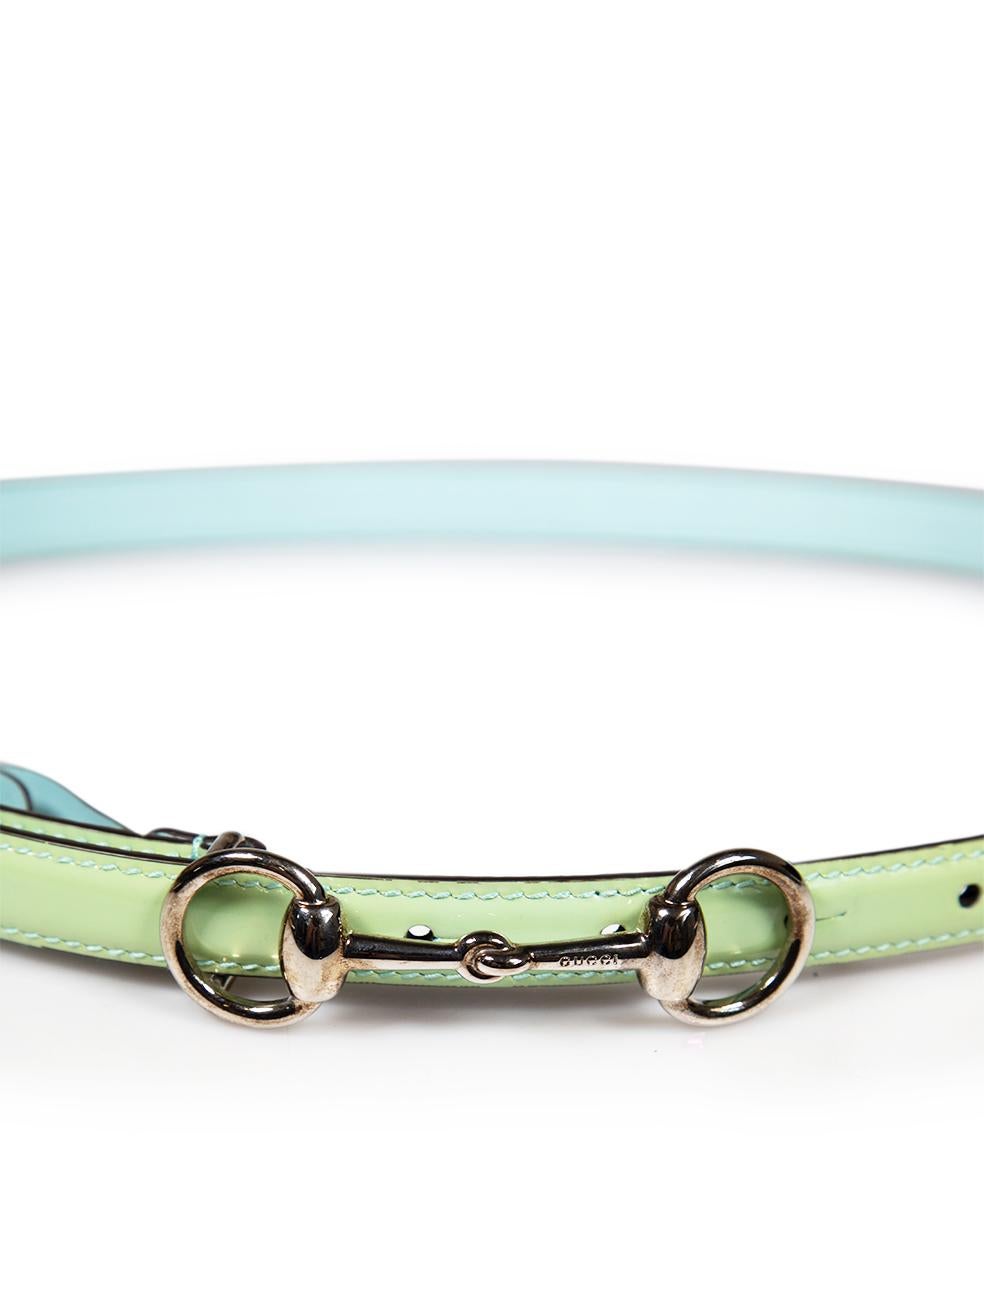 Women's Gucci Green Patent Leather Horsebit Skinny Belt For Sale